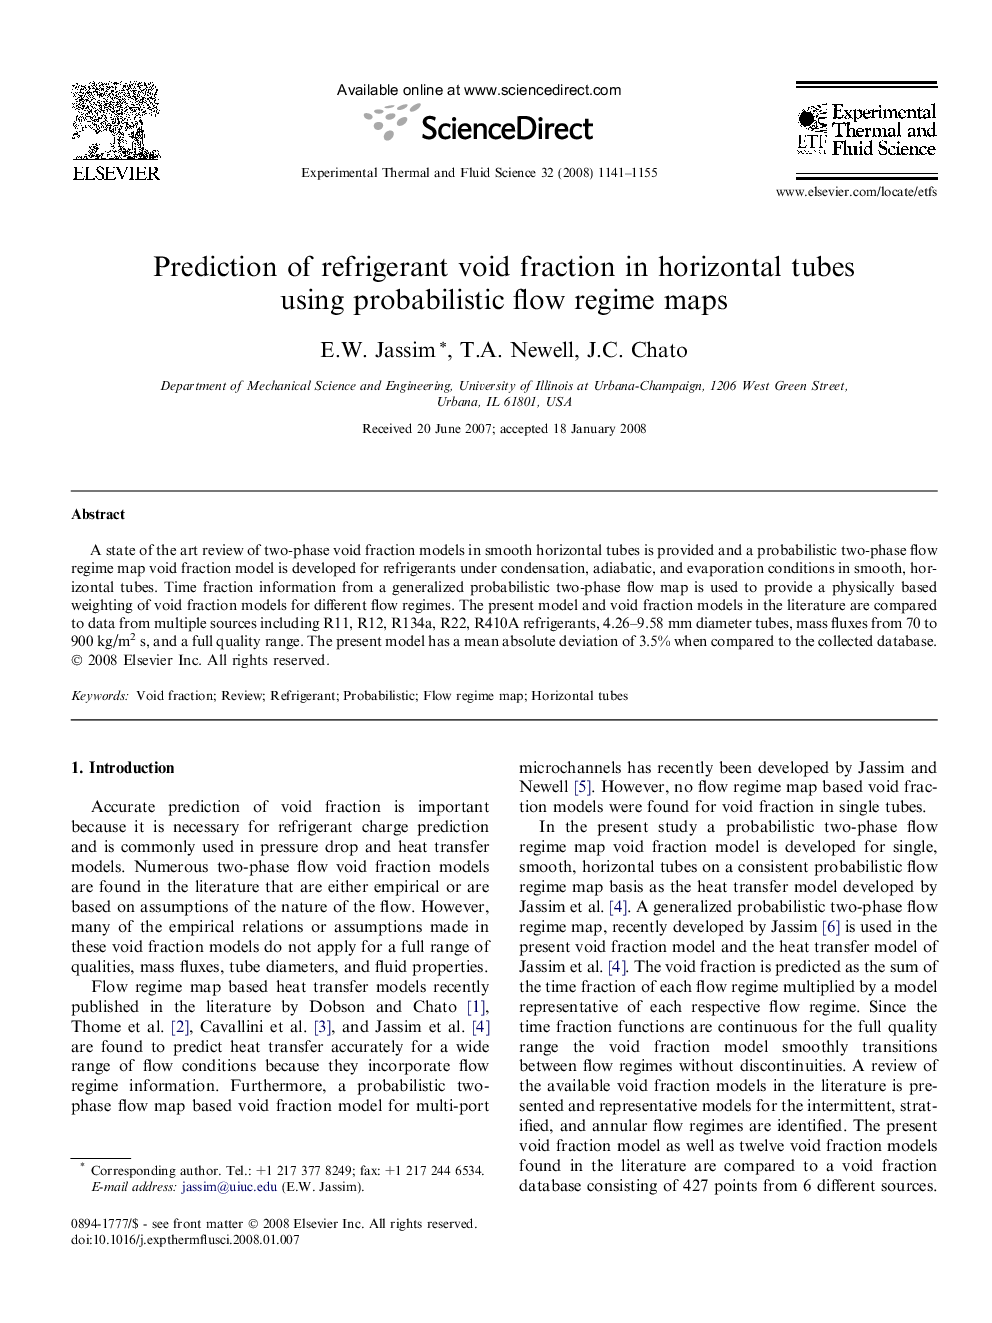 Prediction of refrigerant void fraction in horizontal tubes using probabilistic flow regime maps